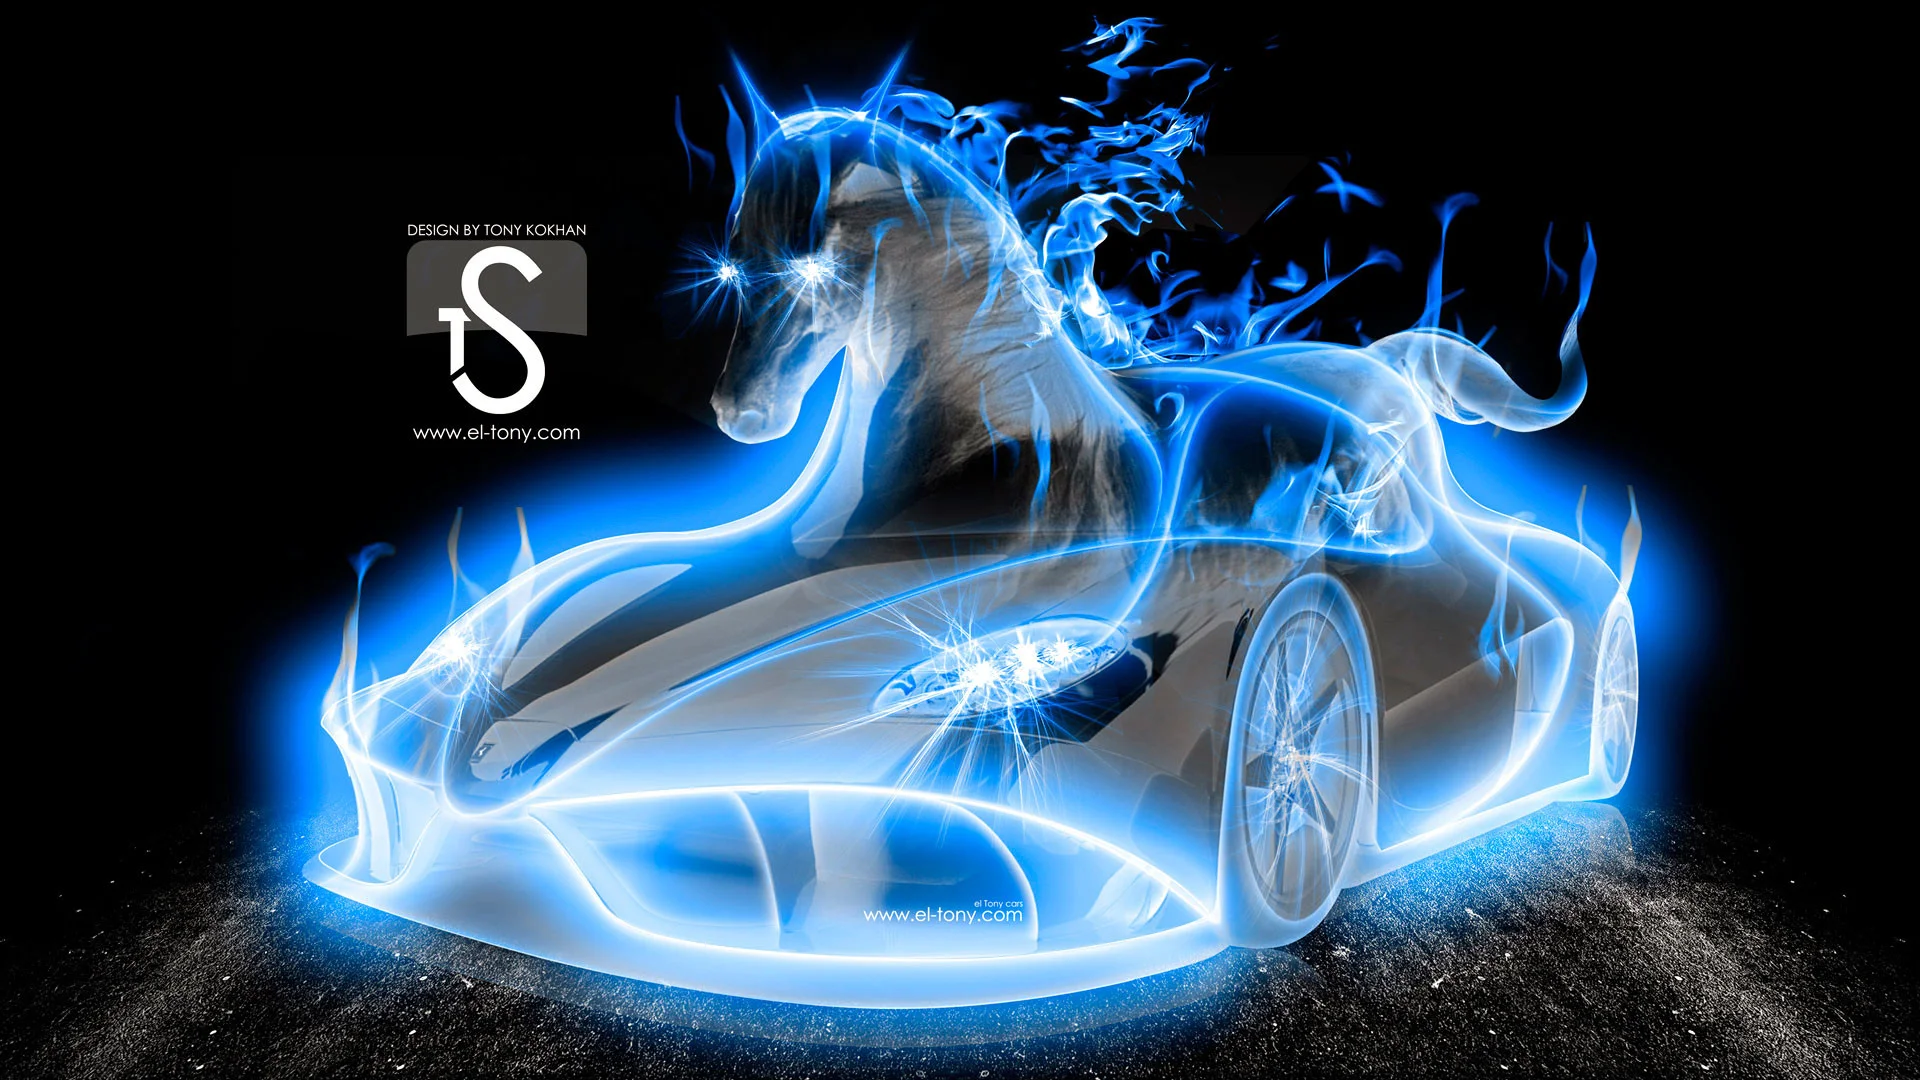 hd pics photos attractive blue neon car horse blue fire hd quality desktop  background wallpaper